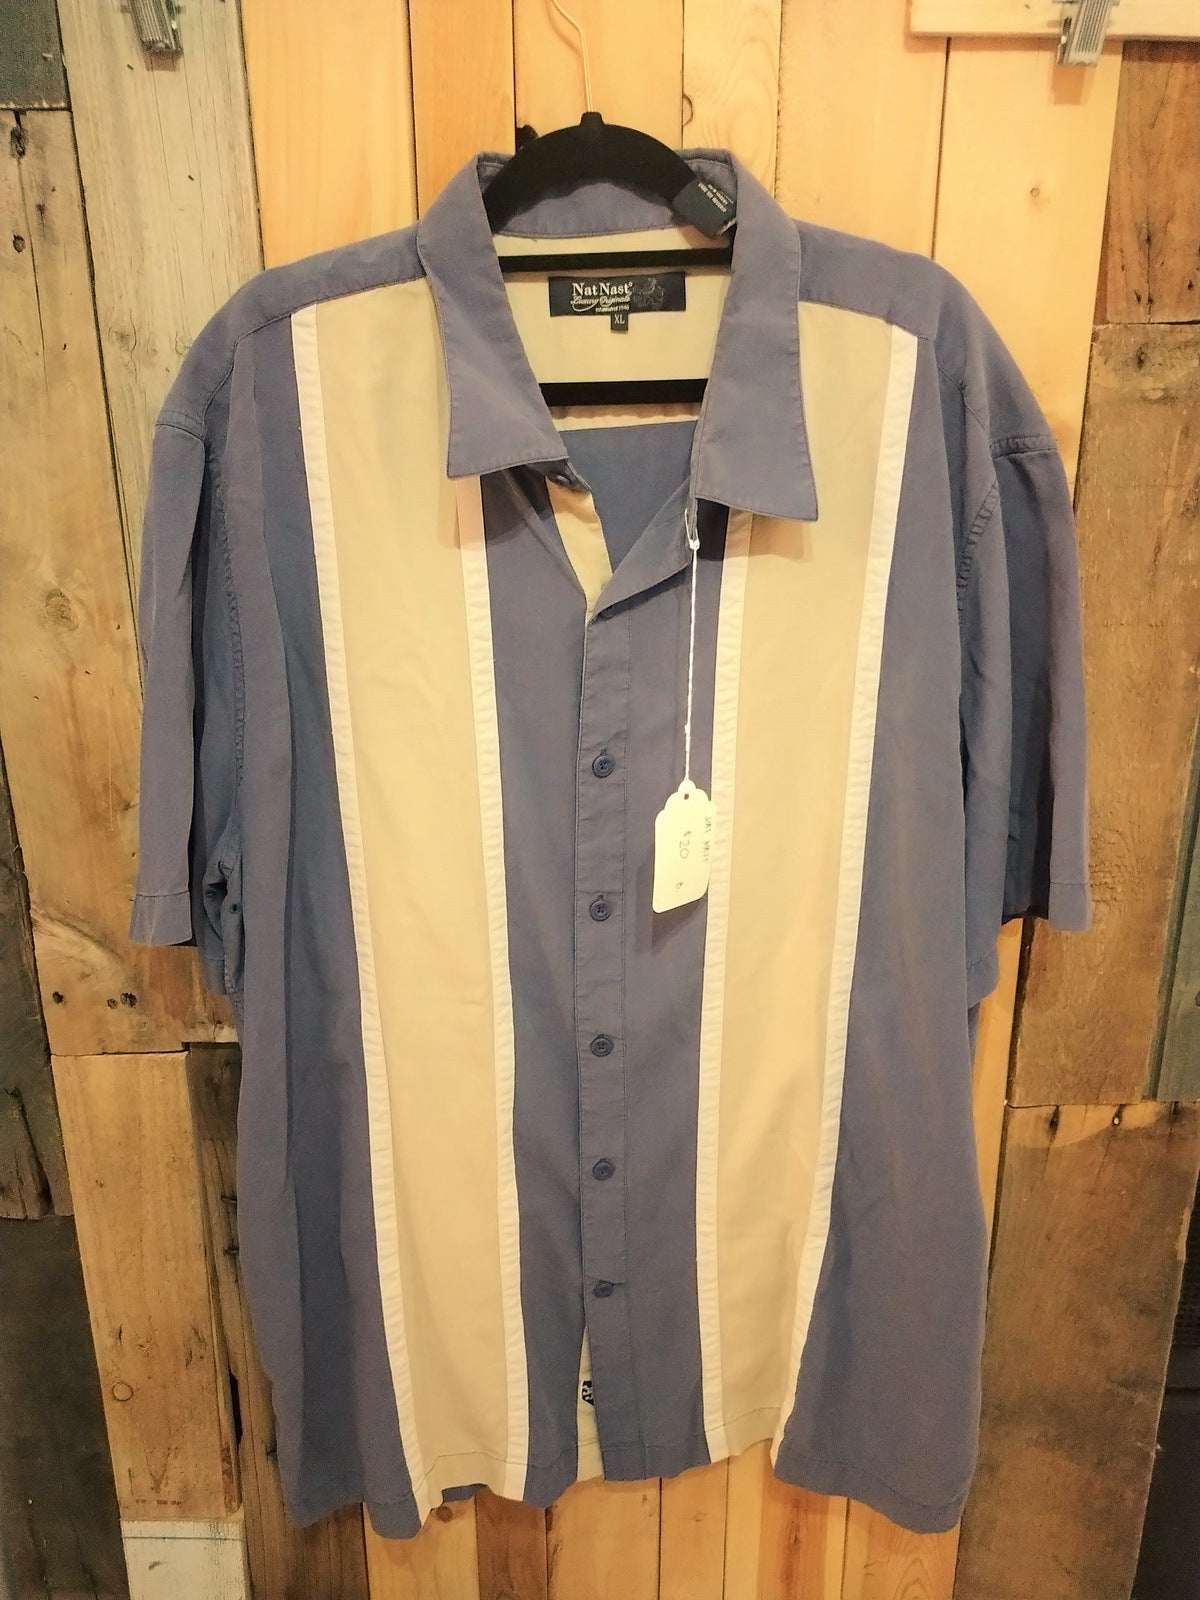 Nat Nast Men's Short Sleeve Bowling Shirt Size XL